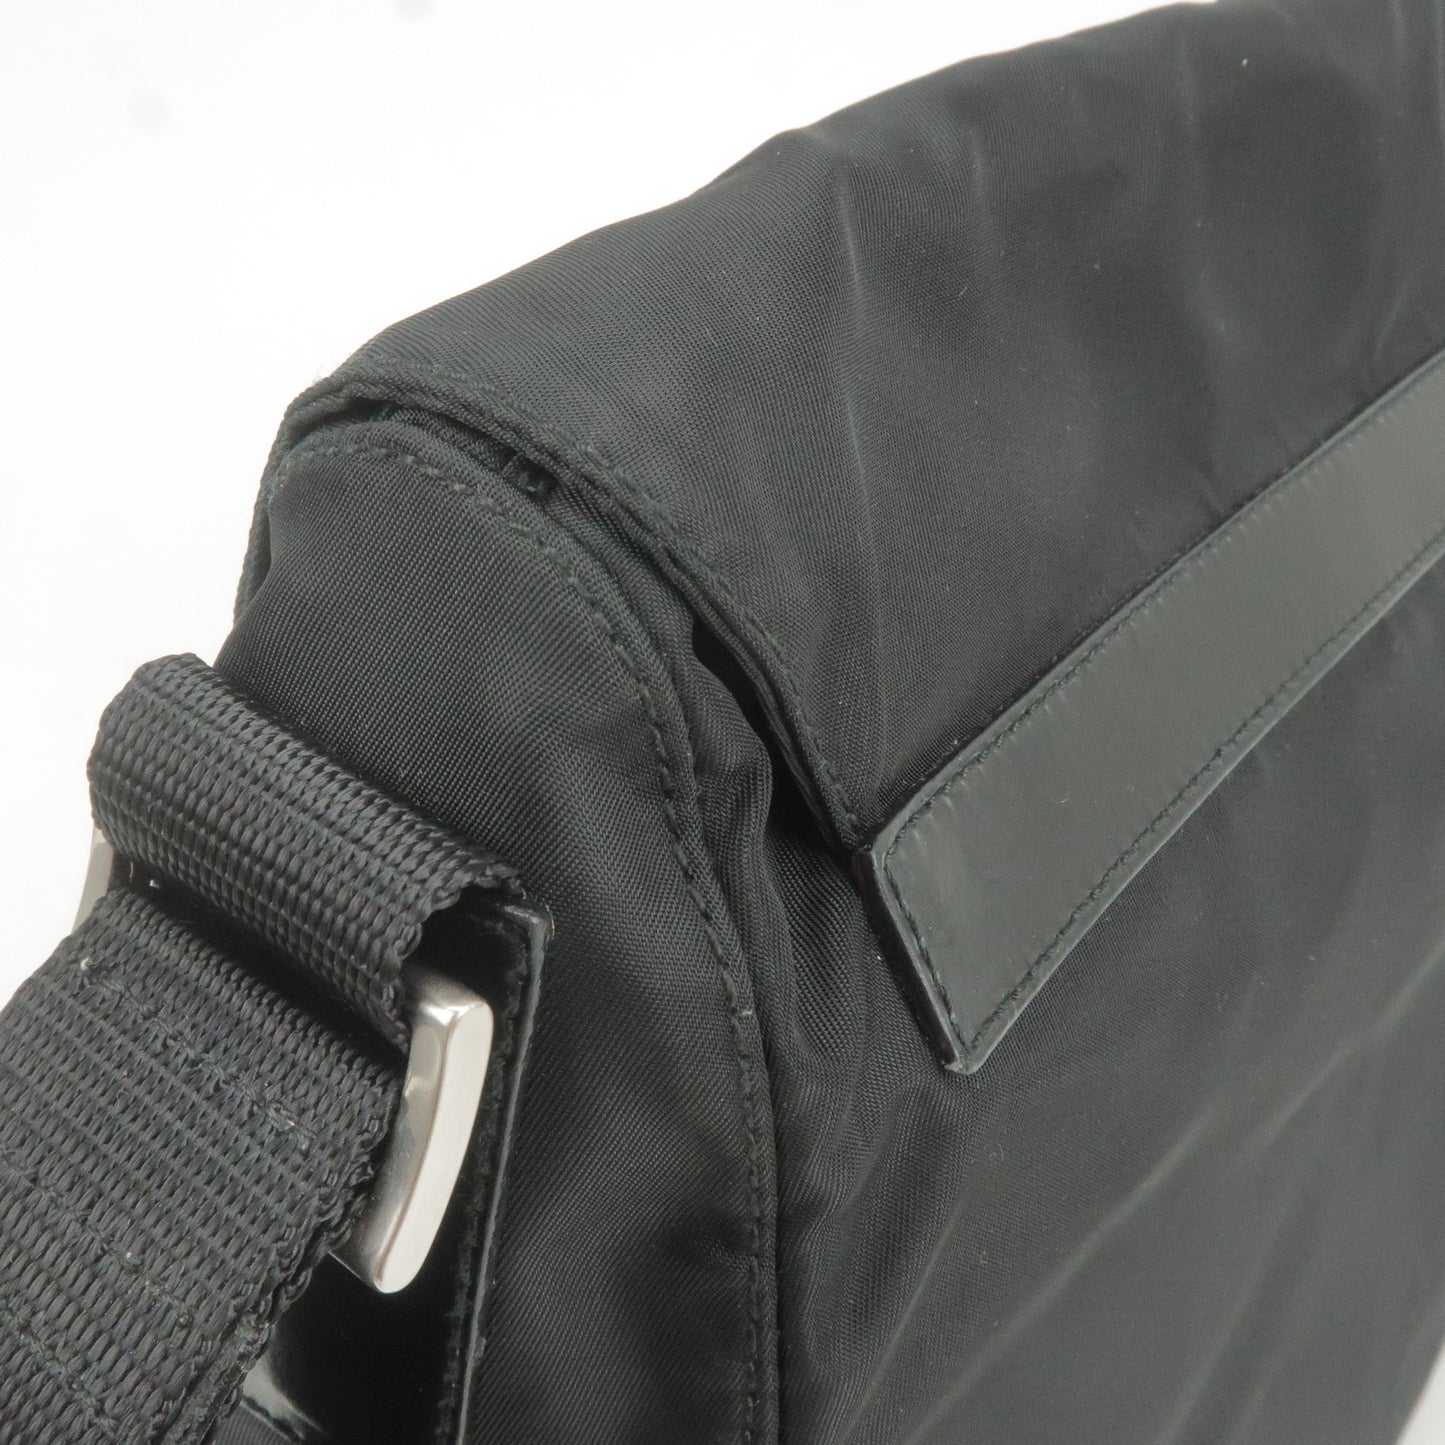 PRADA Logo Nylon Leather Shoulder Bag Purse Bag NERO Black